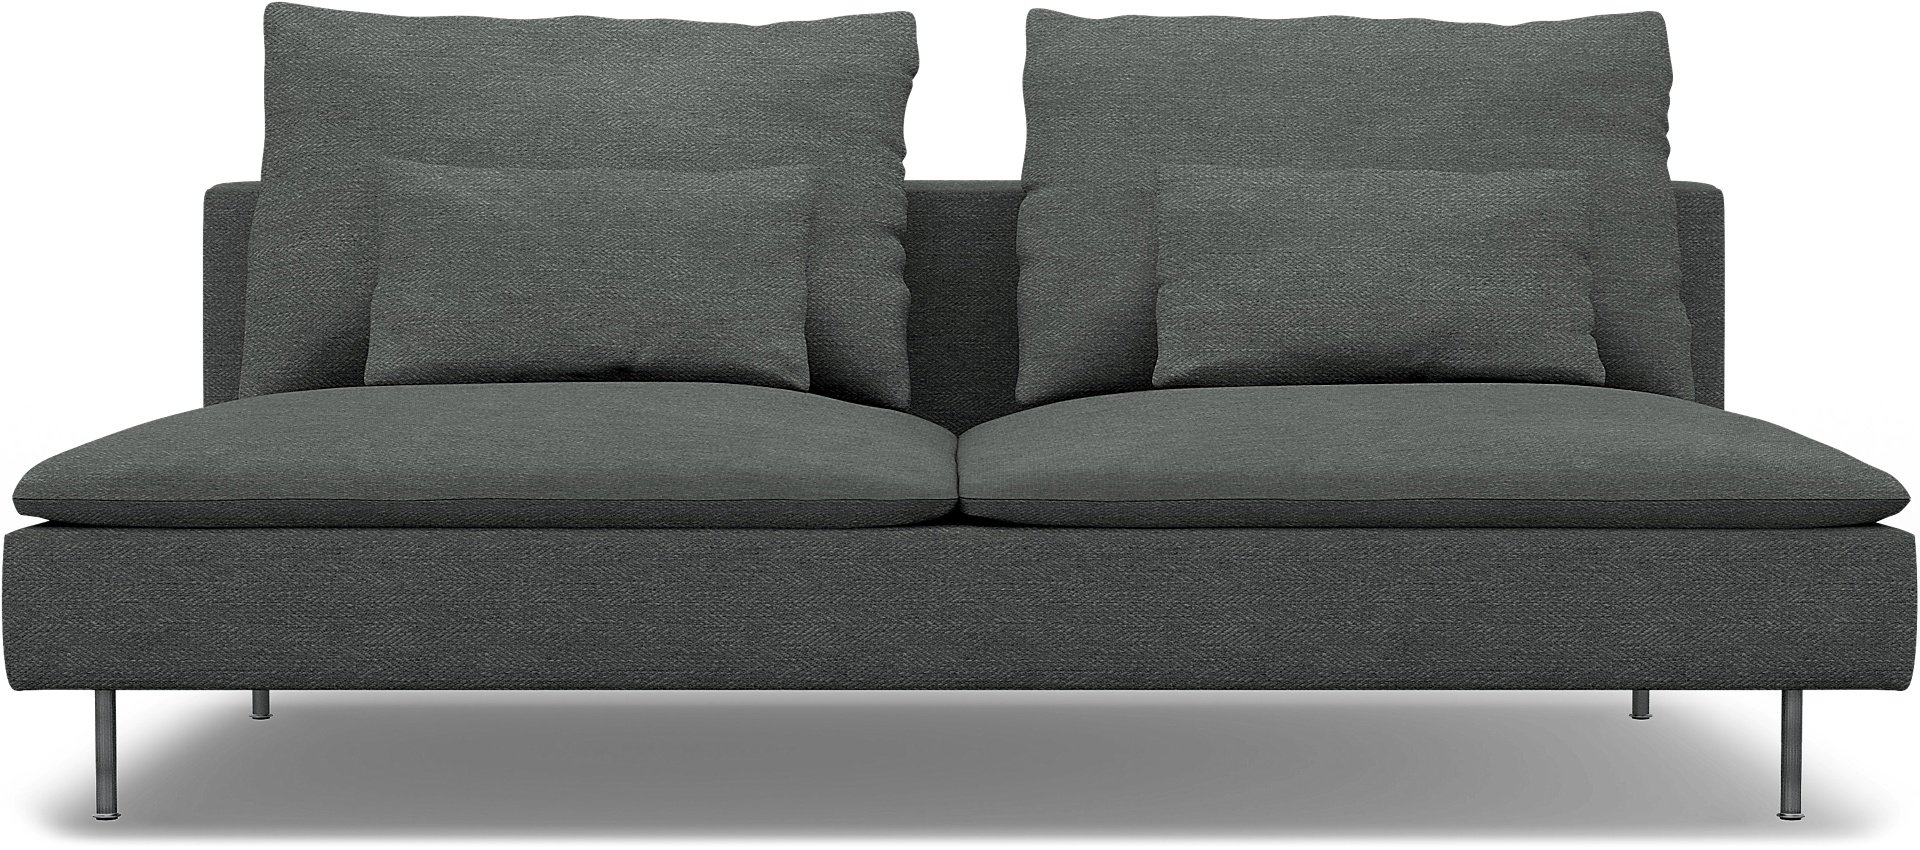 IKEA - Soderhamn 3 Seater Section Cover, Laurel, Boucle & Texture - Bemz